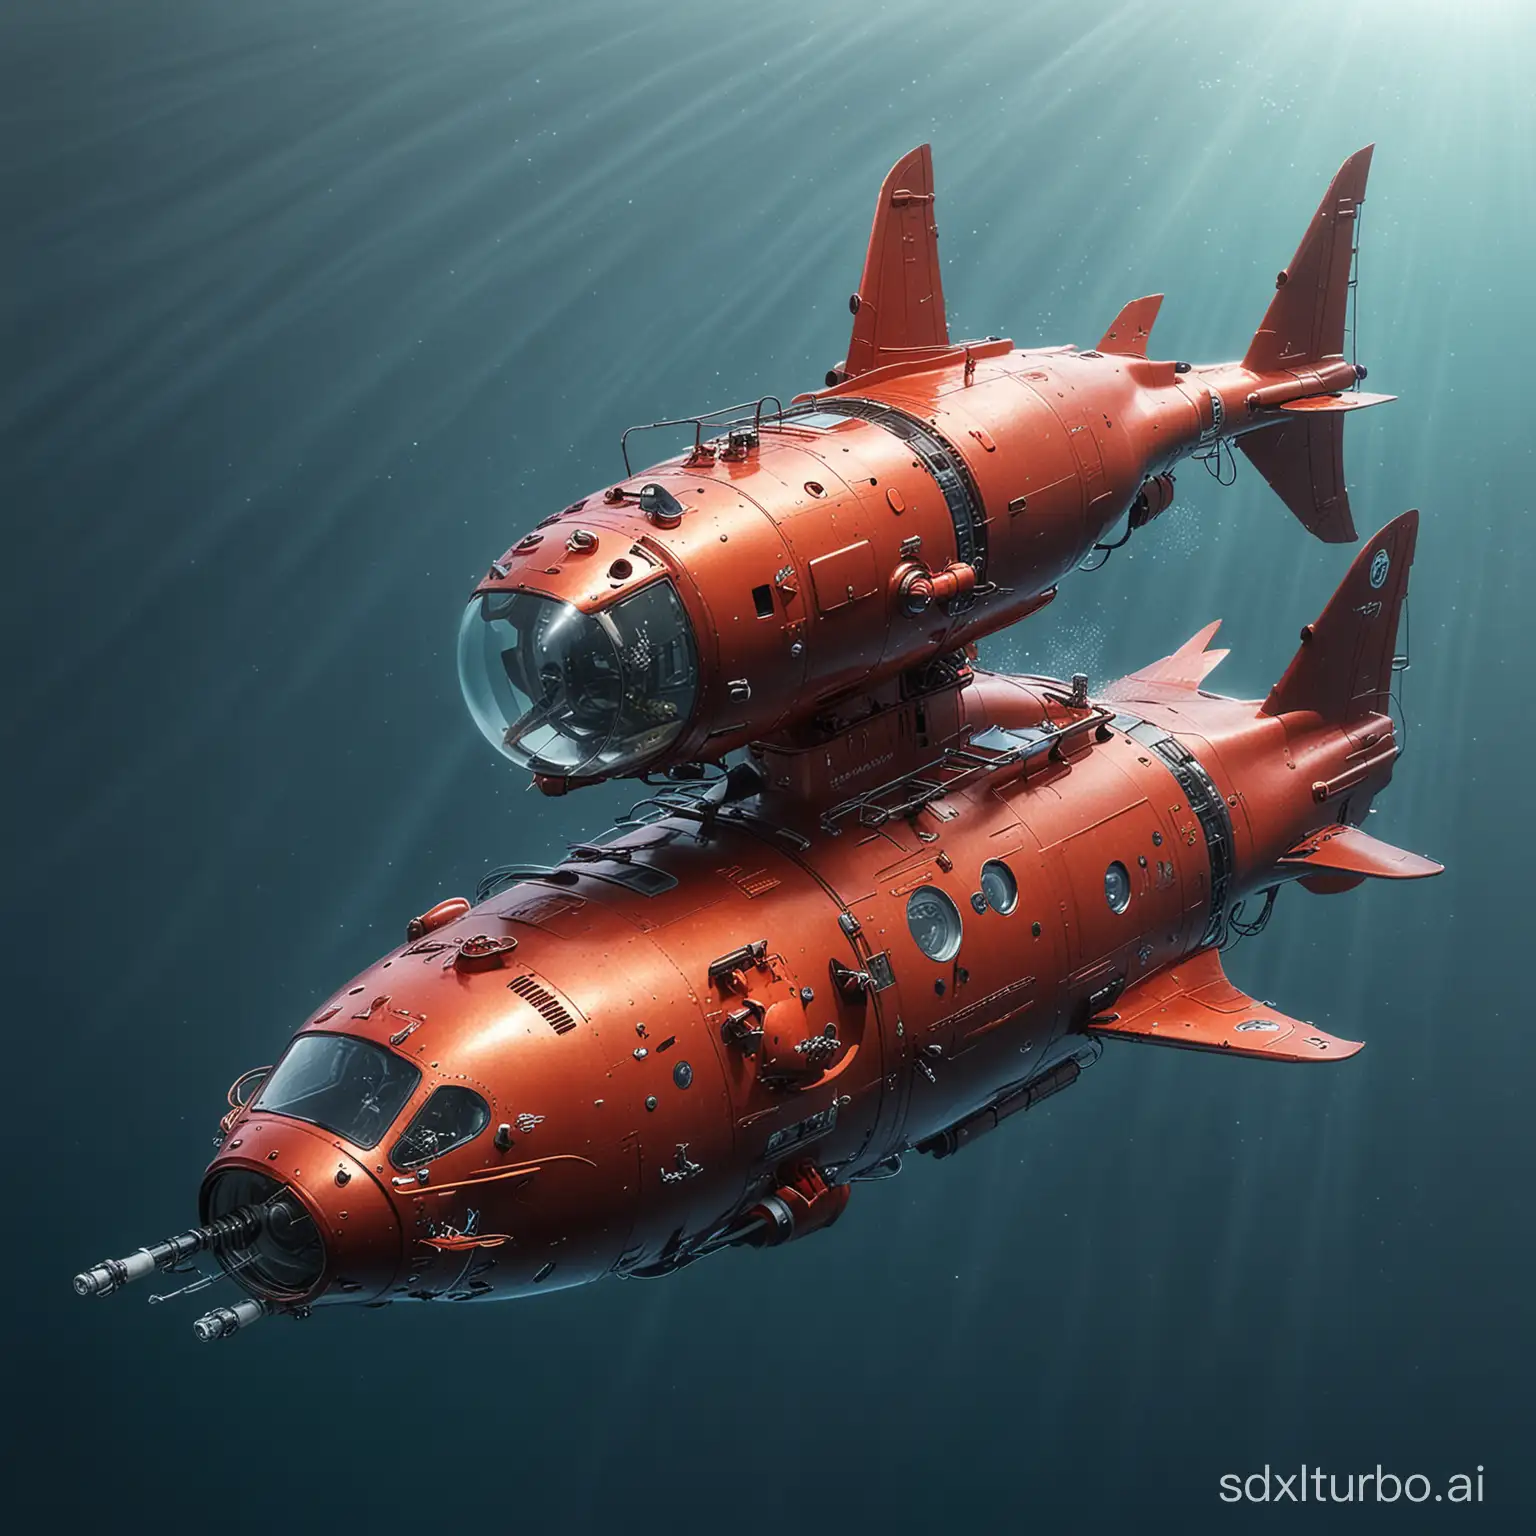 Dragon submersible